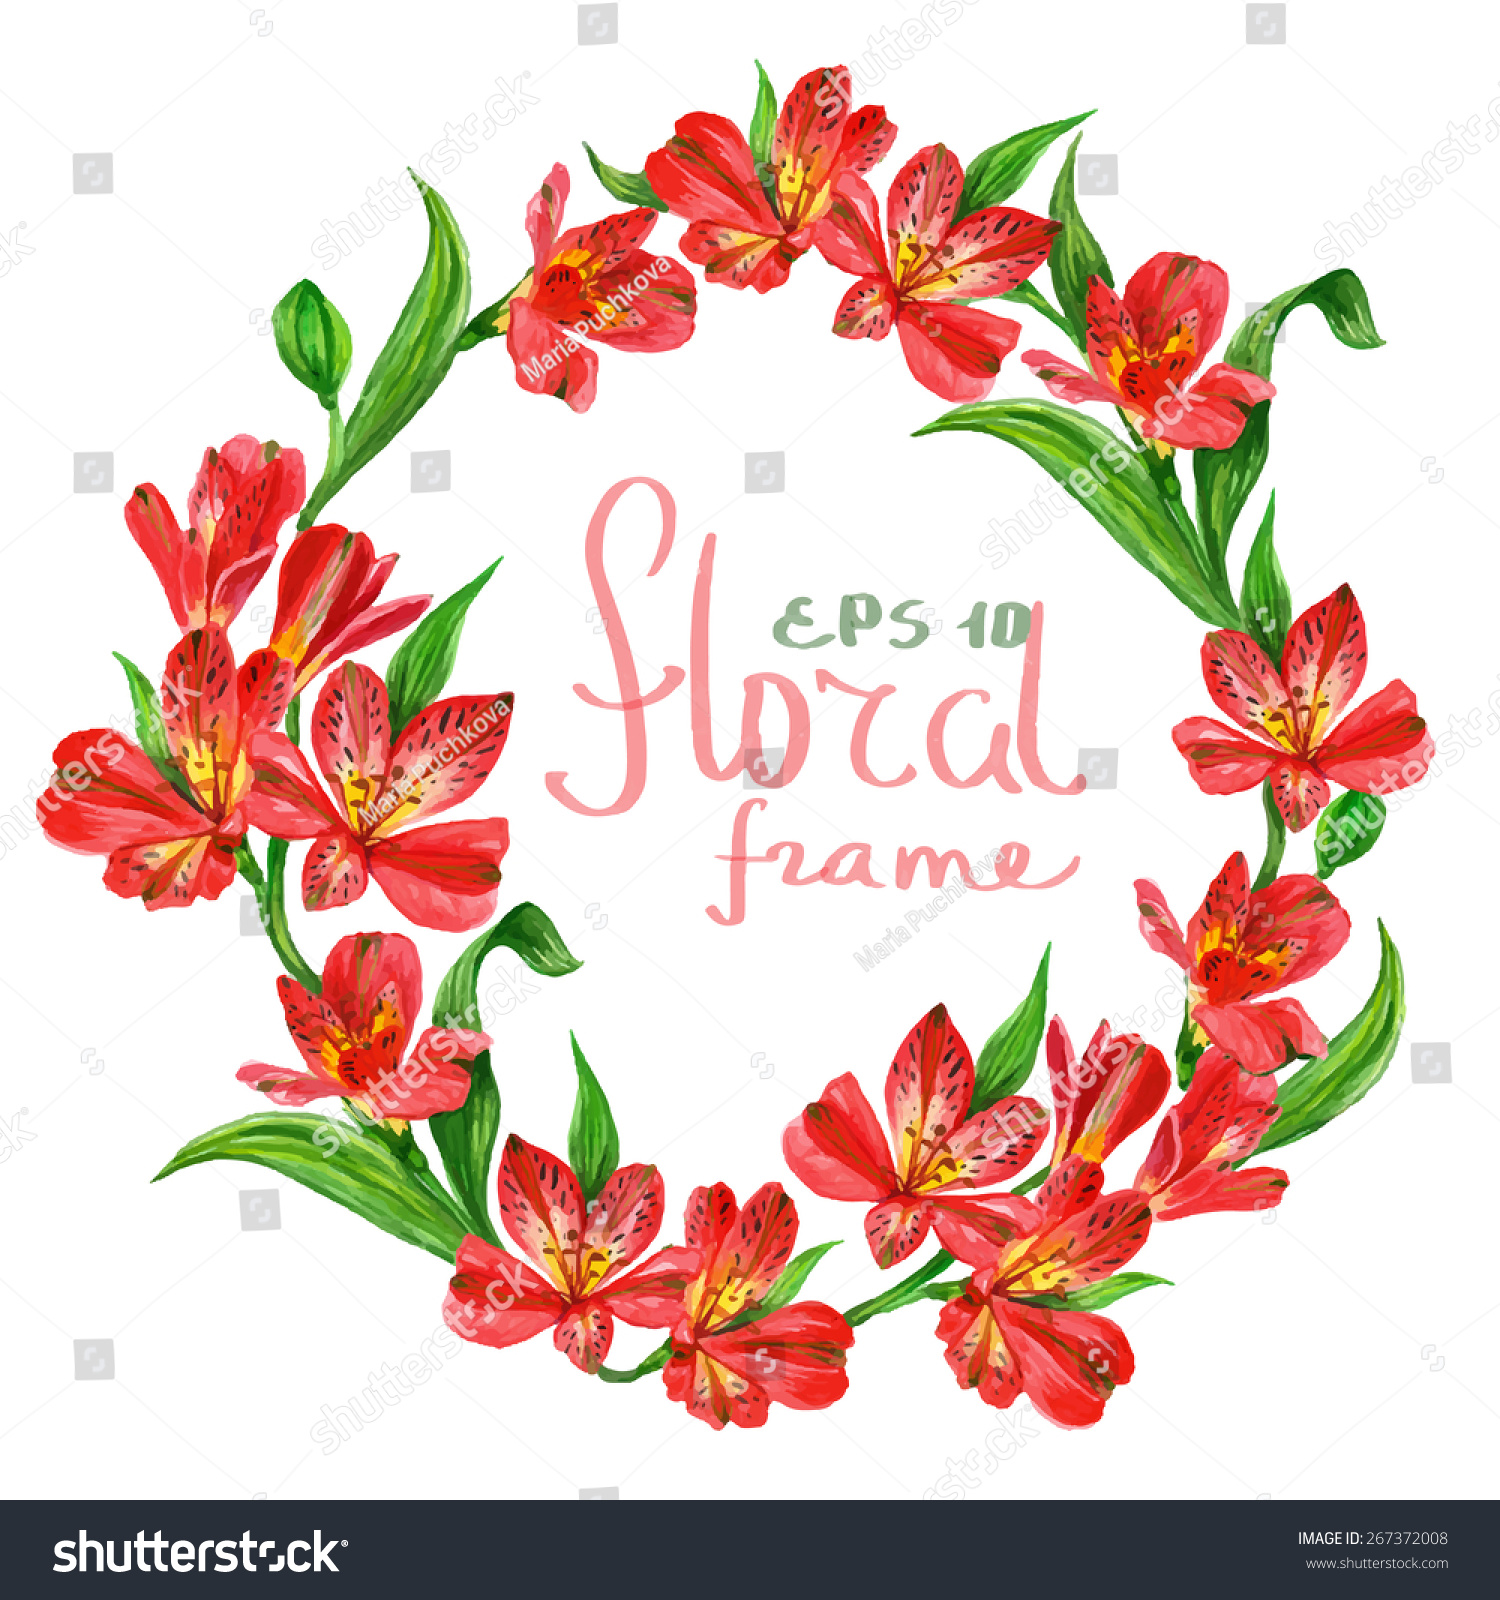 Edit Vectors Free Online - Floral round | Shutterstock Editor